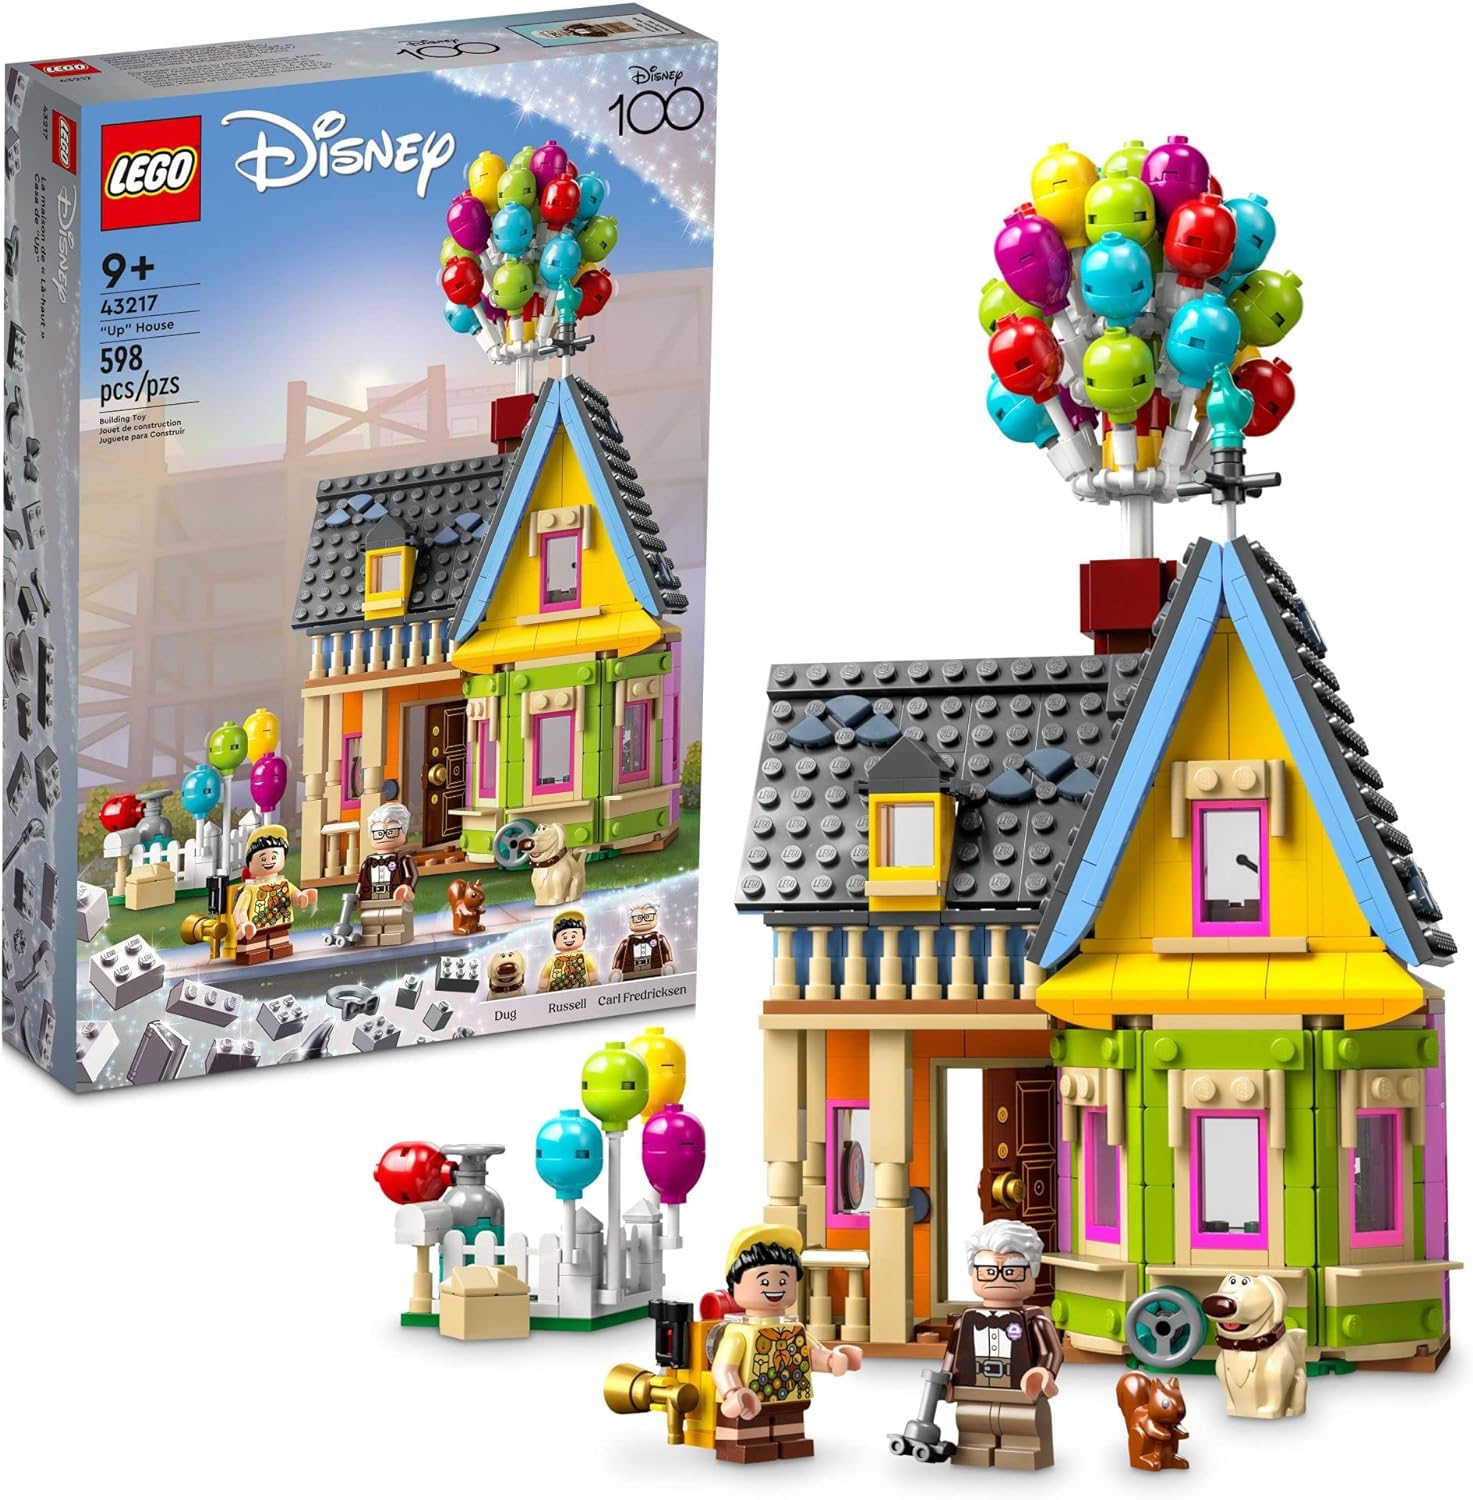 LEGO Disney and Pixar ‘Up’ House 43217 for Disney 100 Celebration, Disney Toy Set for Kids